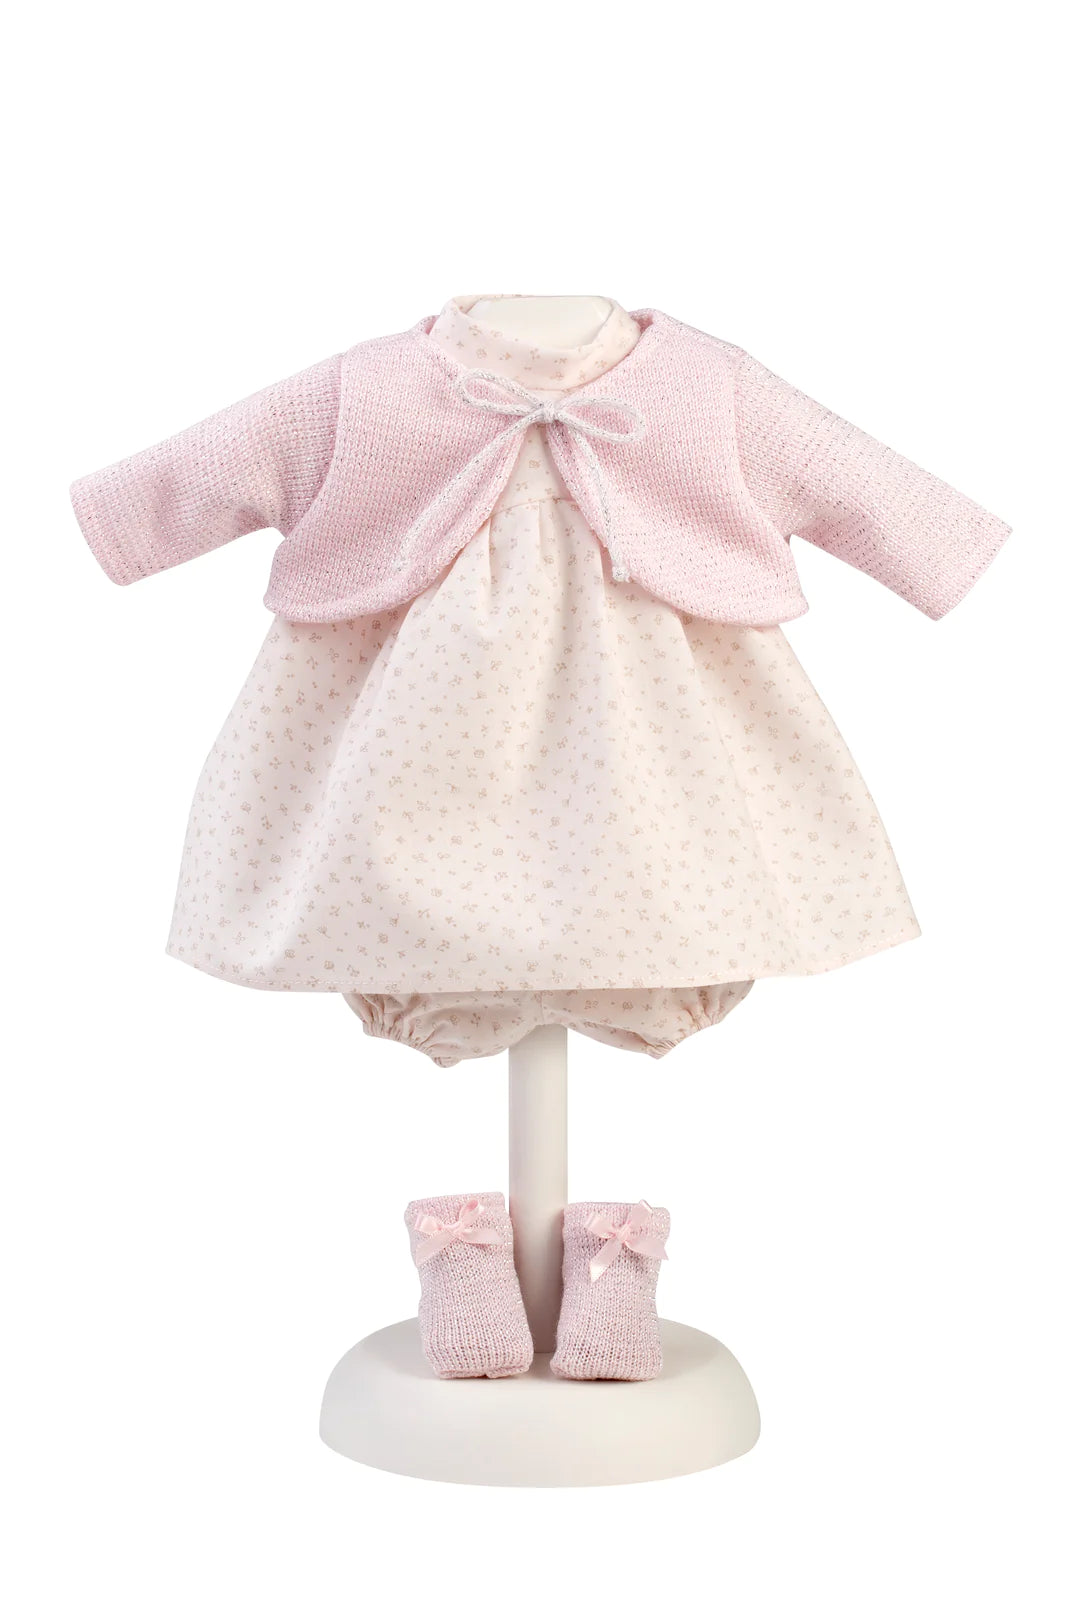 V-94204 Dolls Clothing - Pink Dress